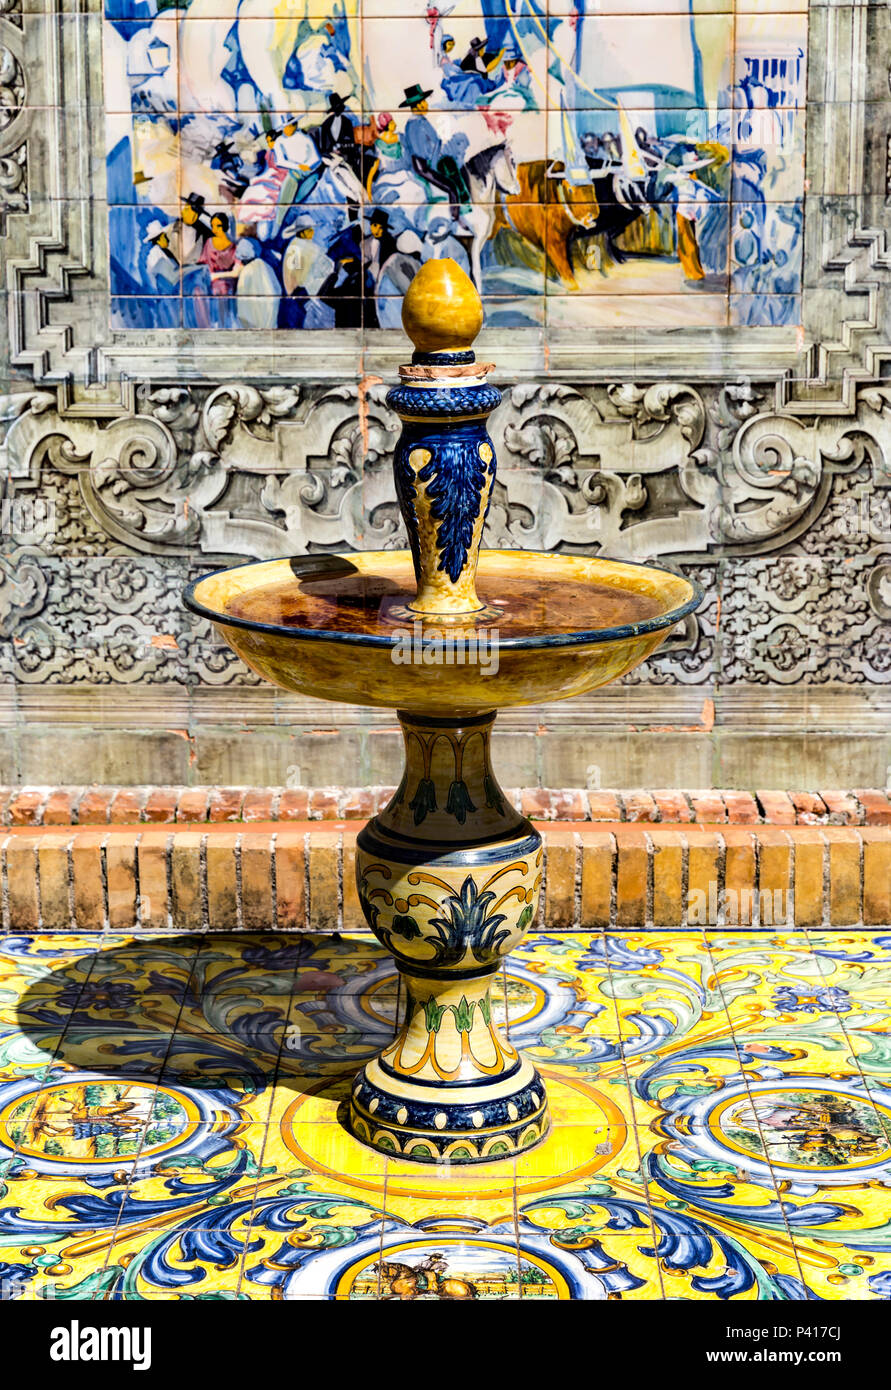 Old ceramic pedestal bowl full of water, Plaza de Espana, Andalusia, Spain. Stock Photo